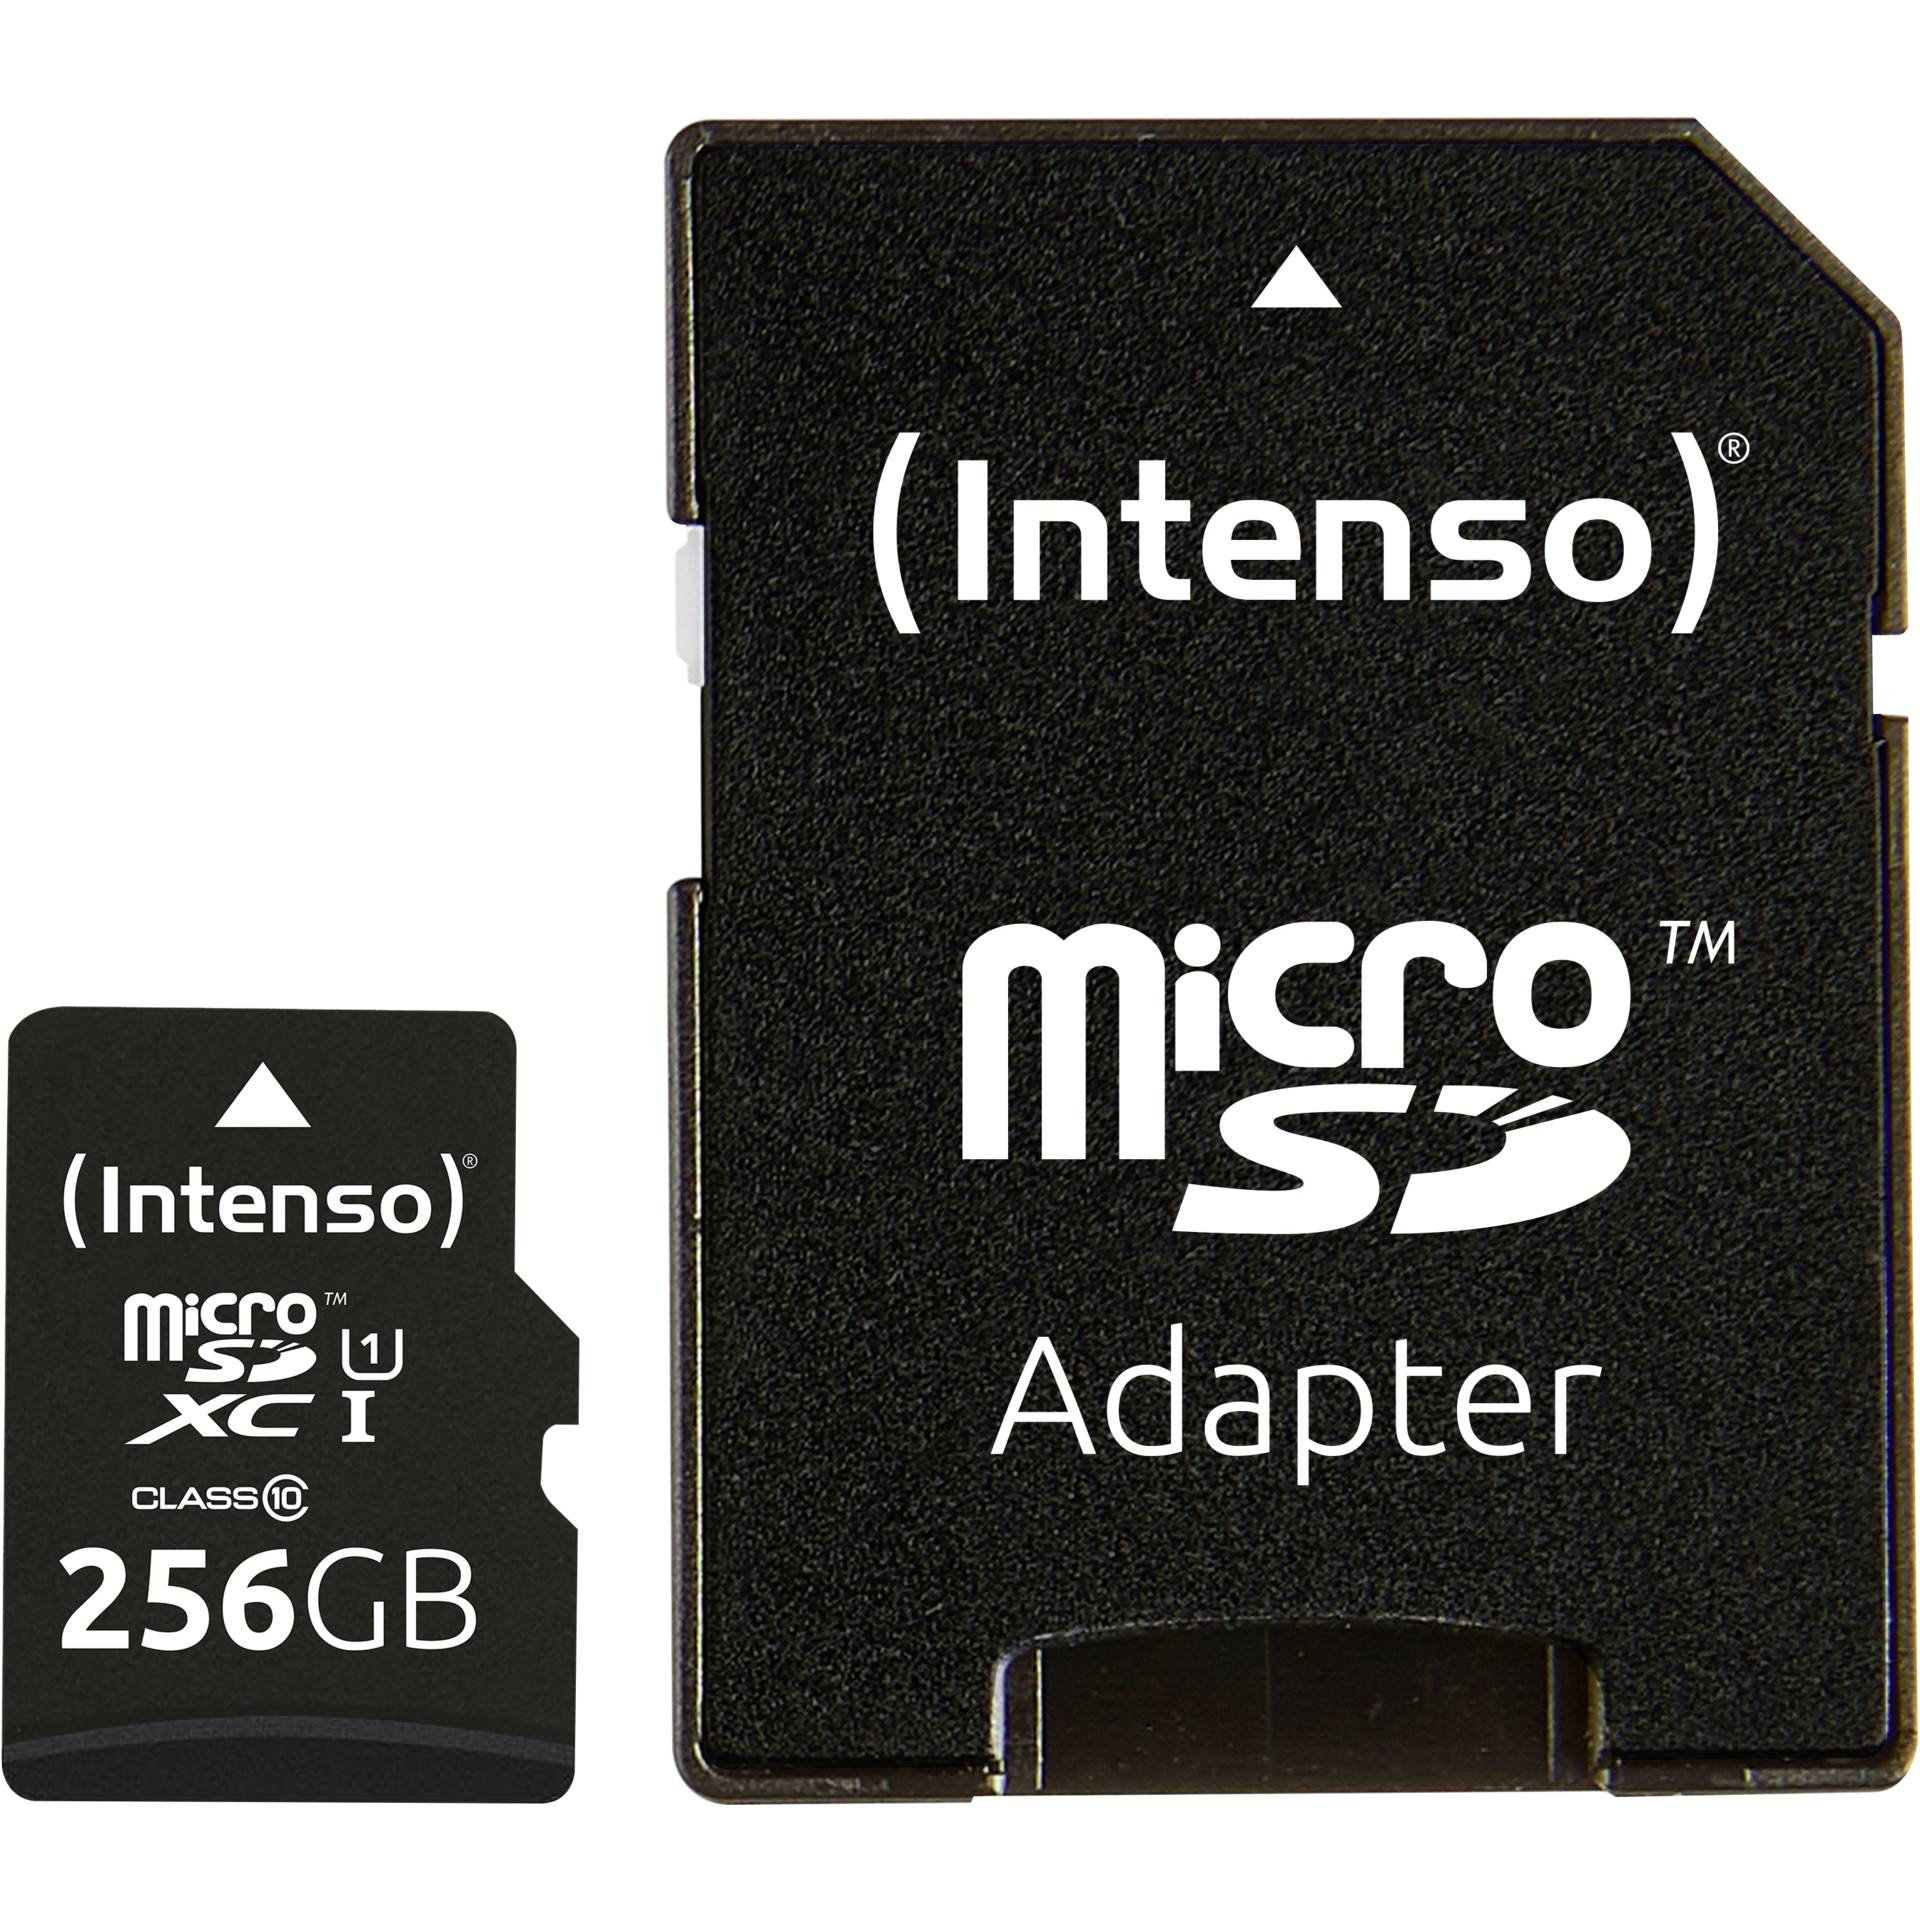 Intenso microSDXC Cards    256GB Class 10 UHS-I Premium